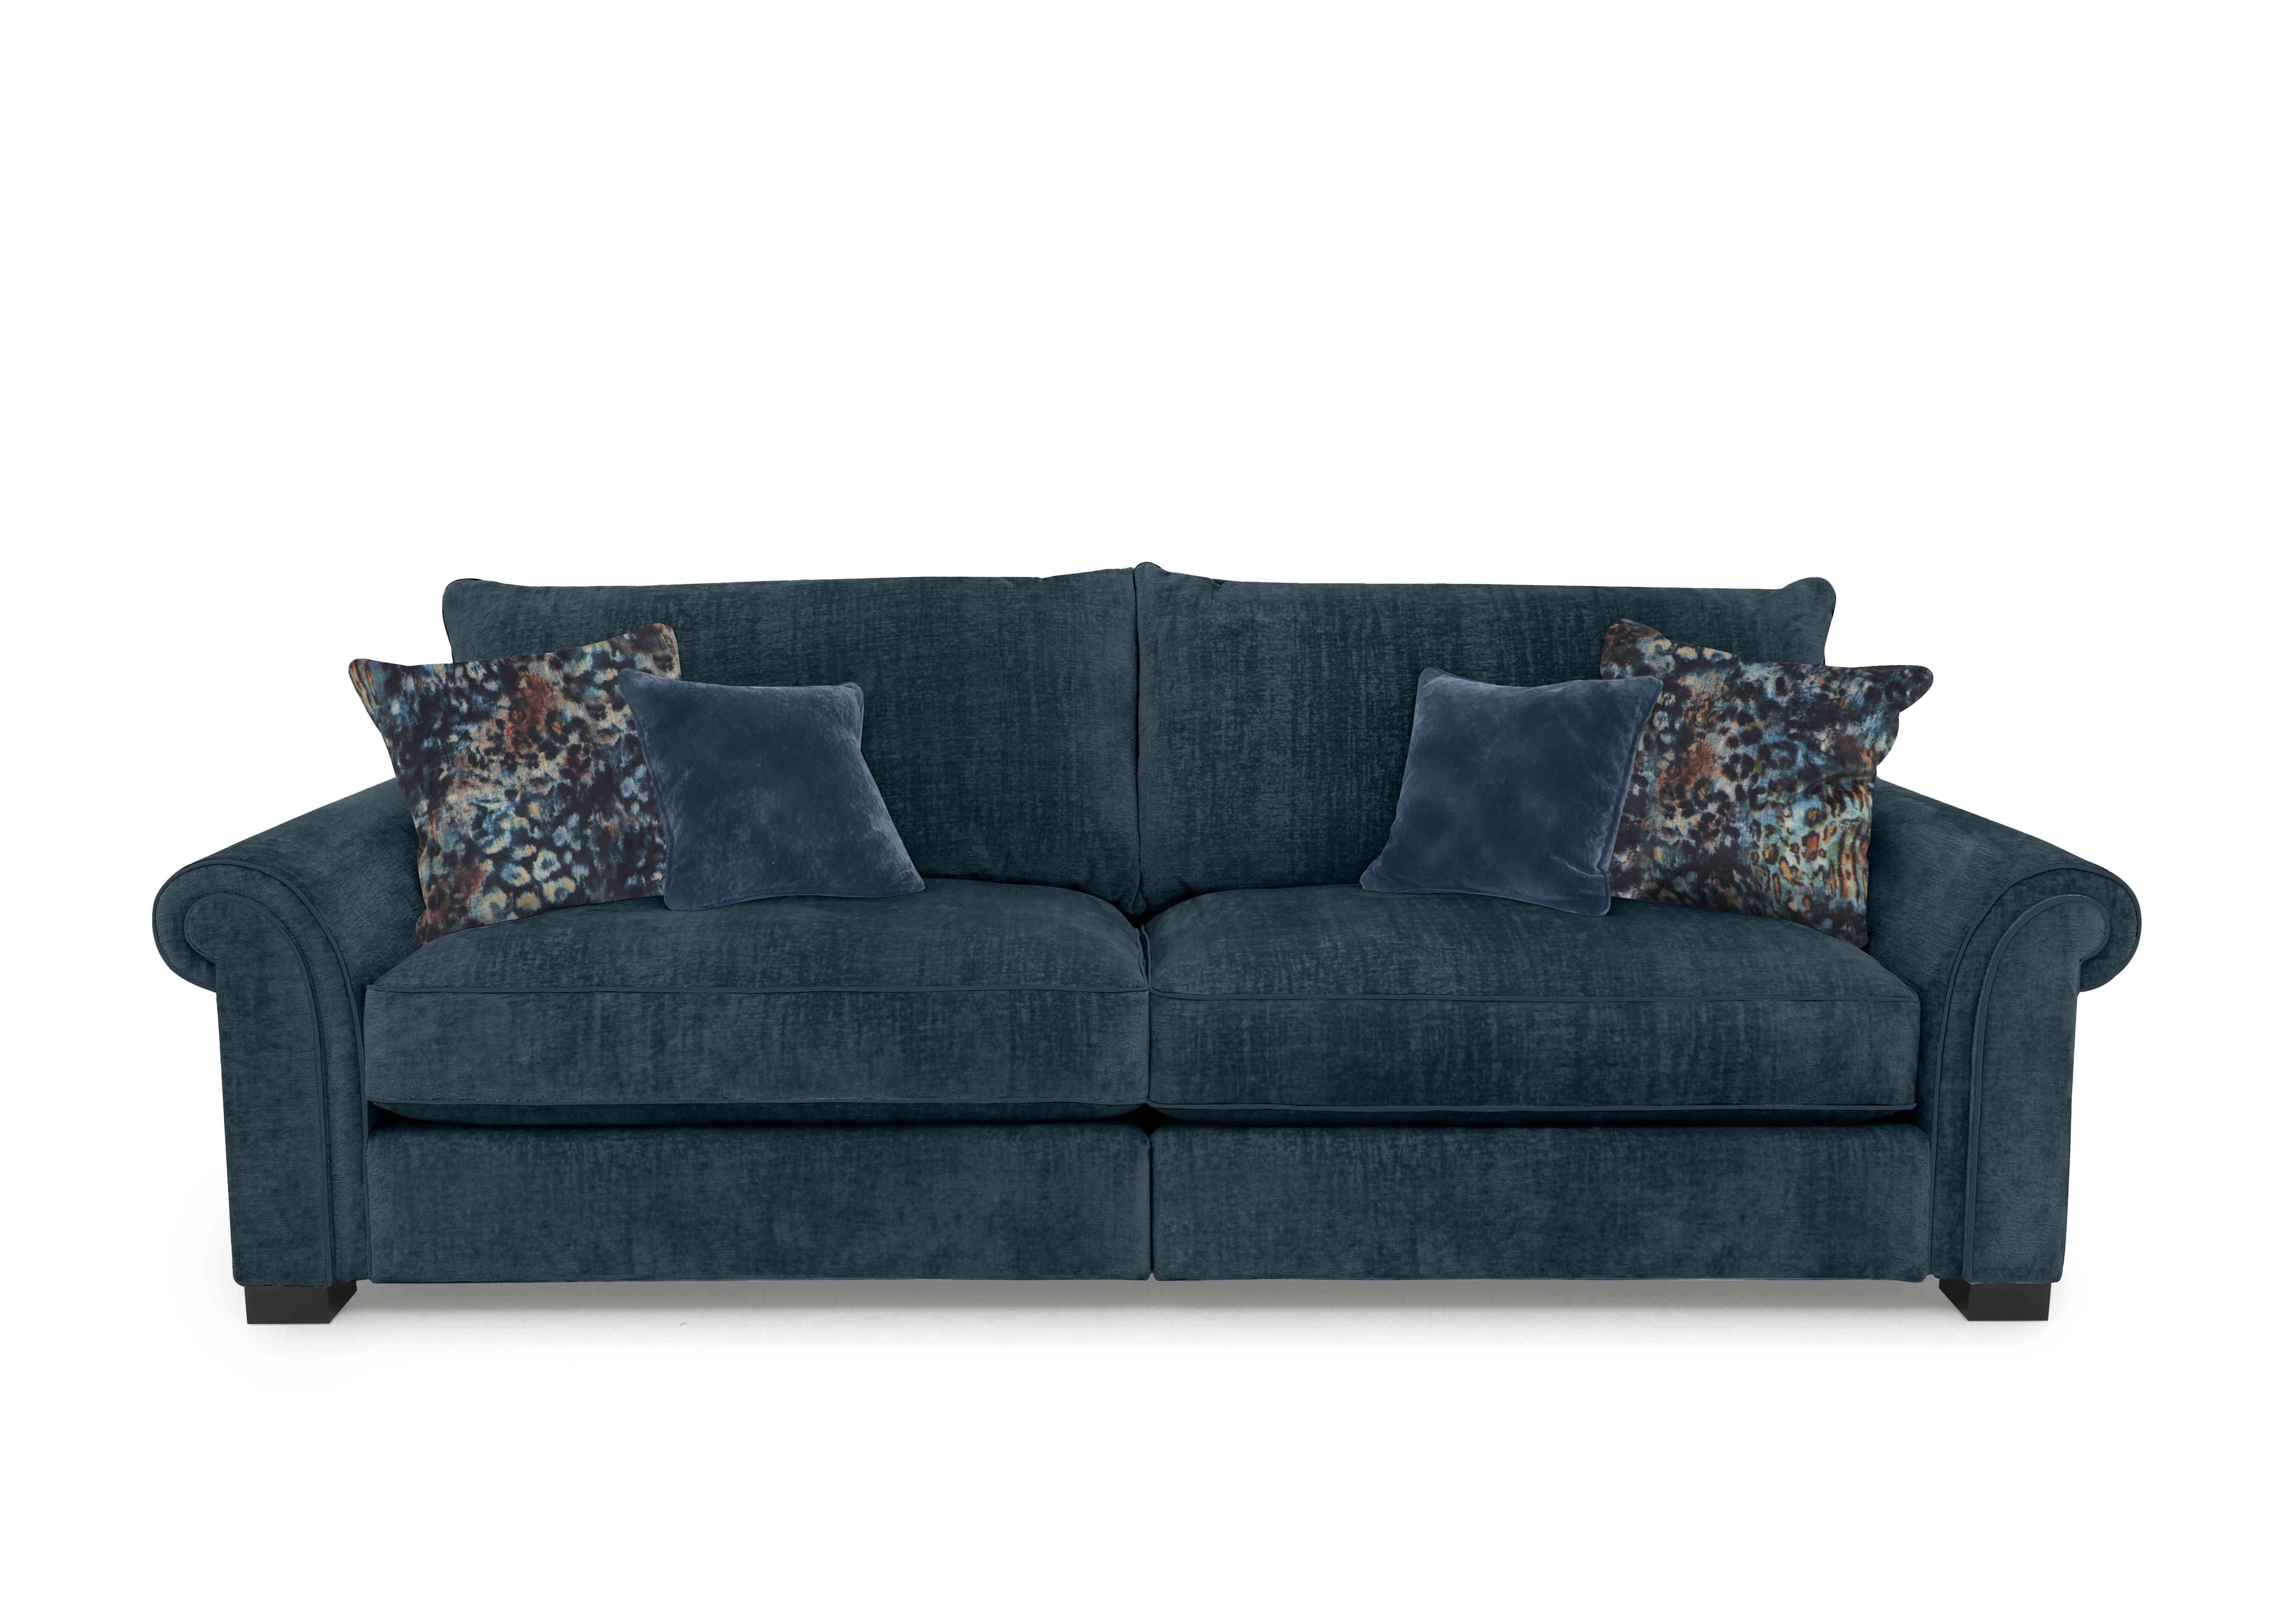 Modern Classics St James Park 4 Seater Split Frame Sofa in Remini Petrol Blue Sp Mf on Furniture Village